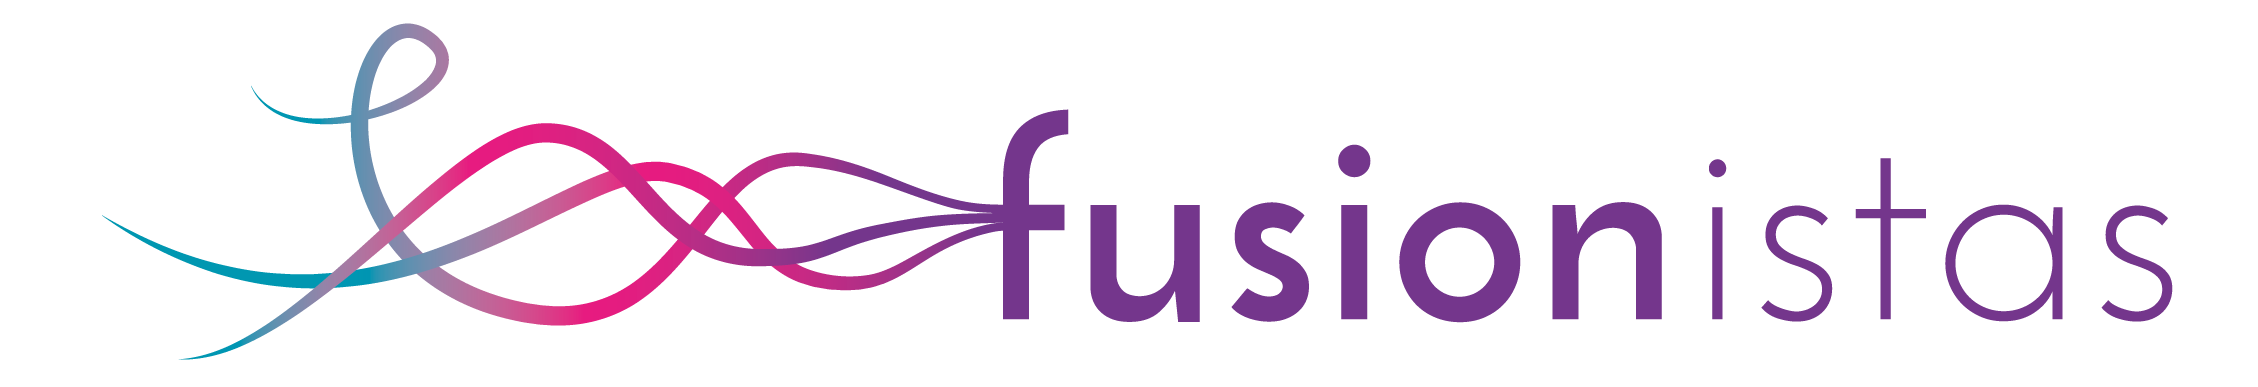 210419_Fusionistas-Logo